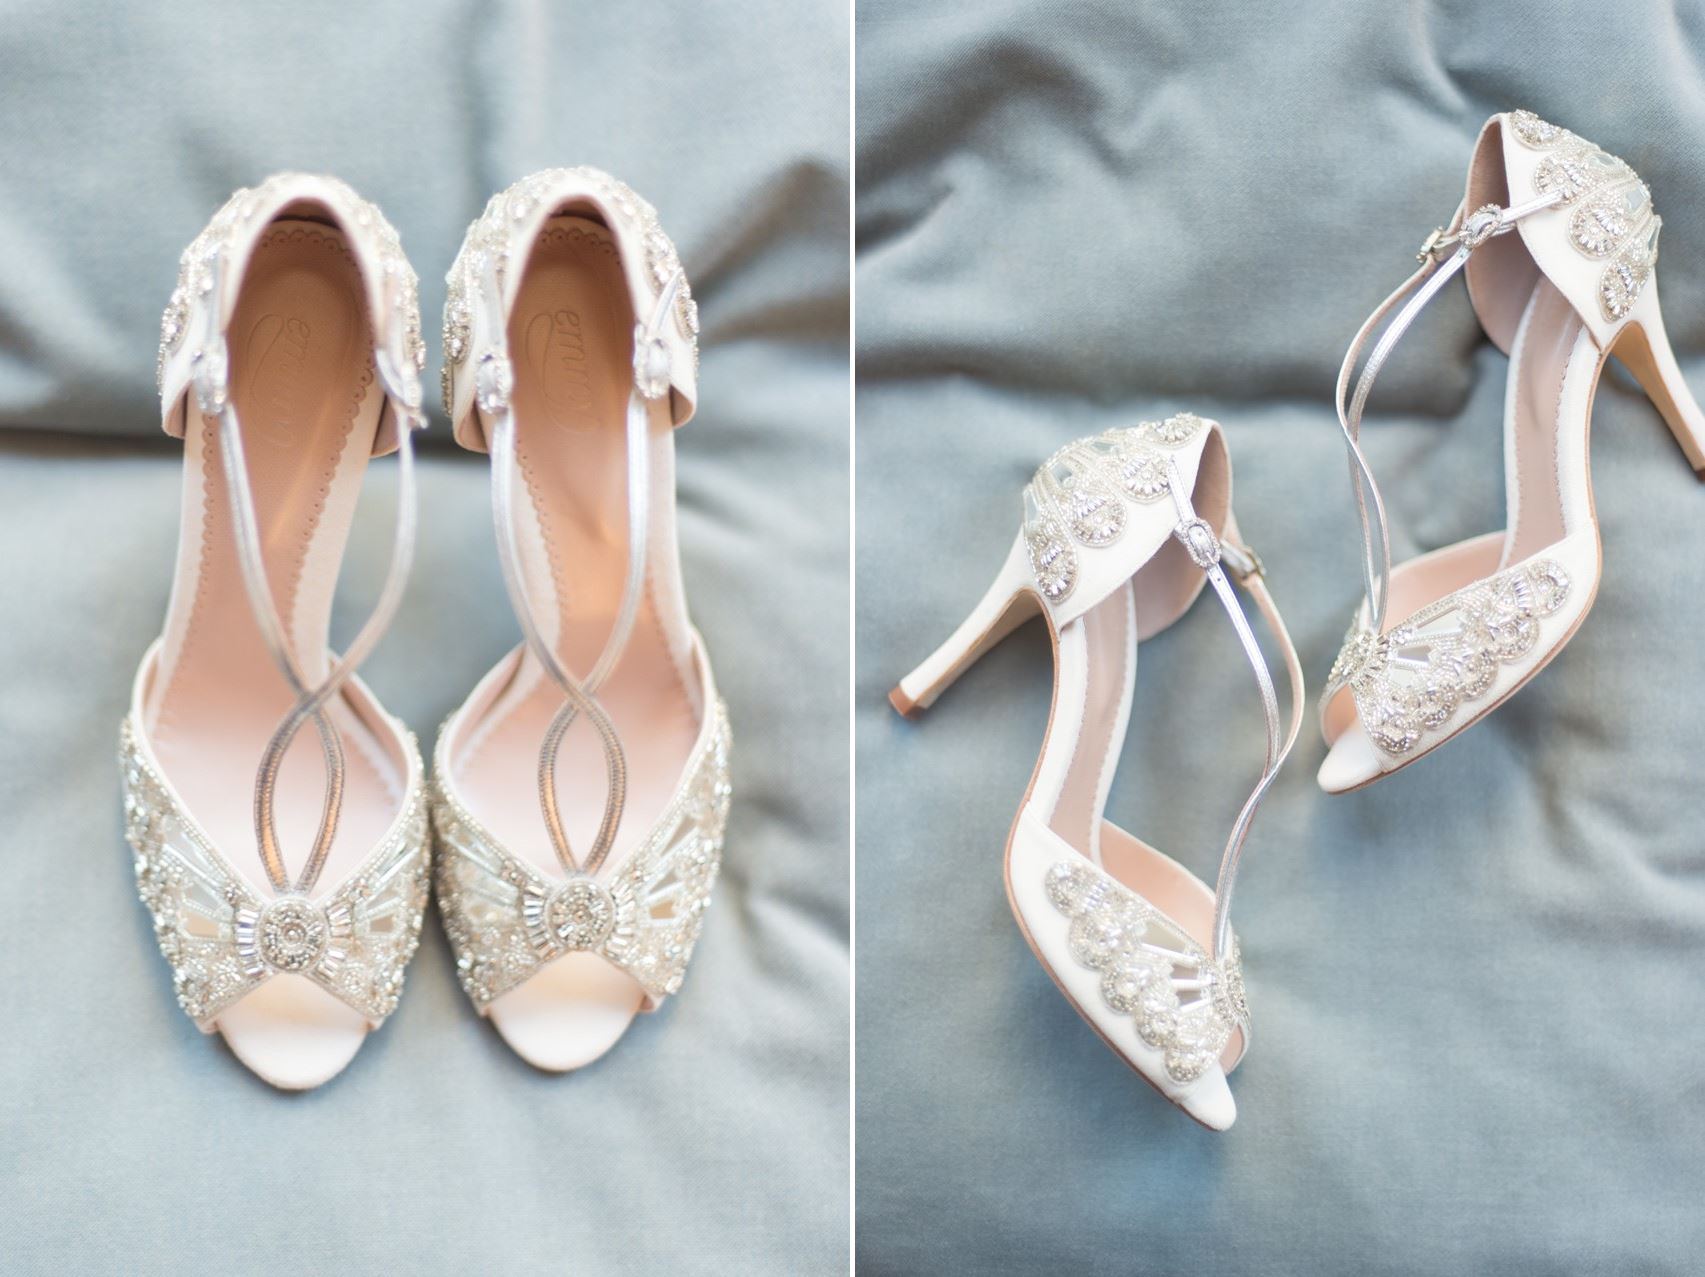 Glamorous Bridal Shoes from Emmy London